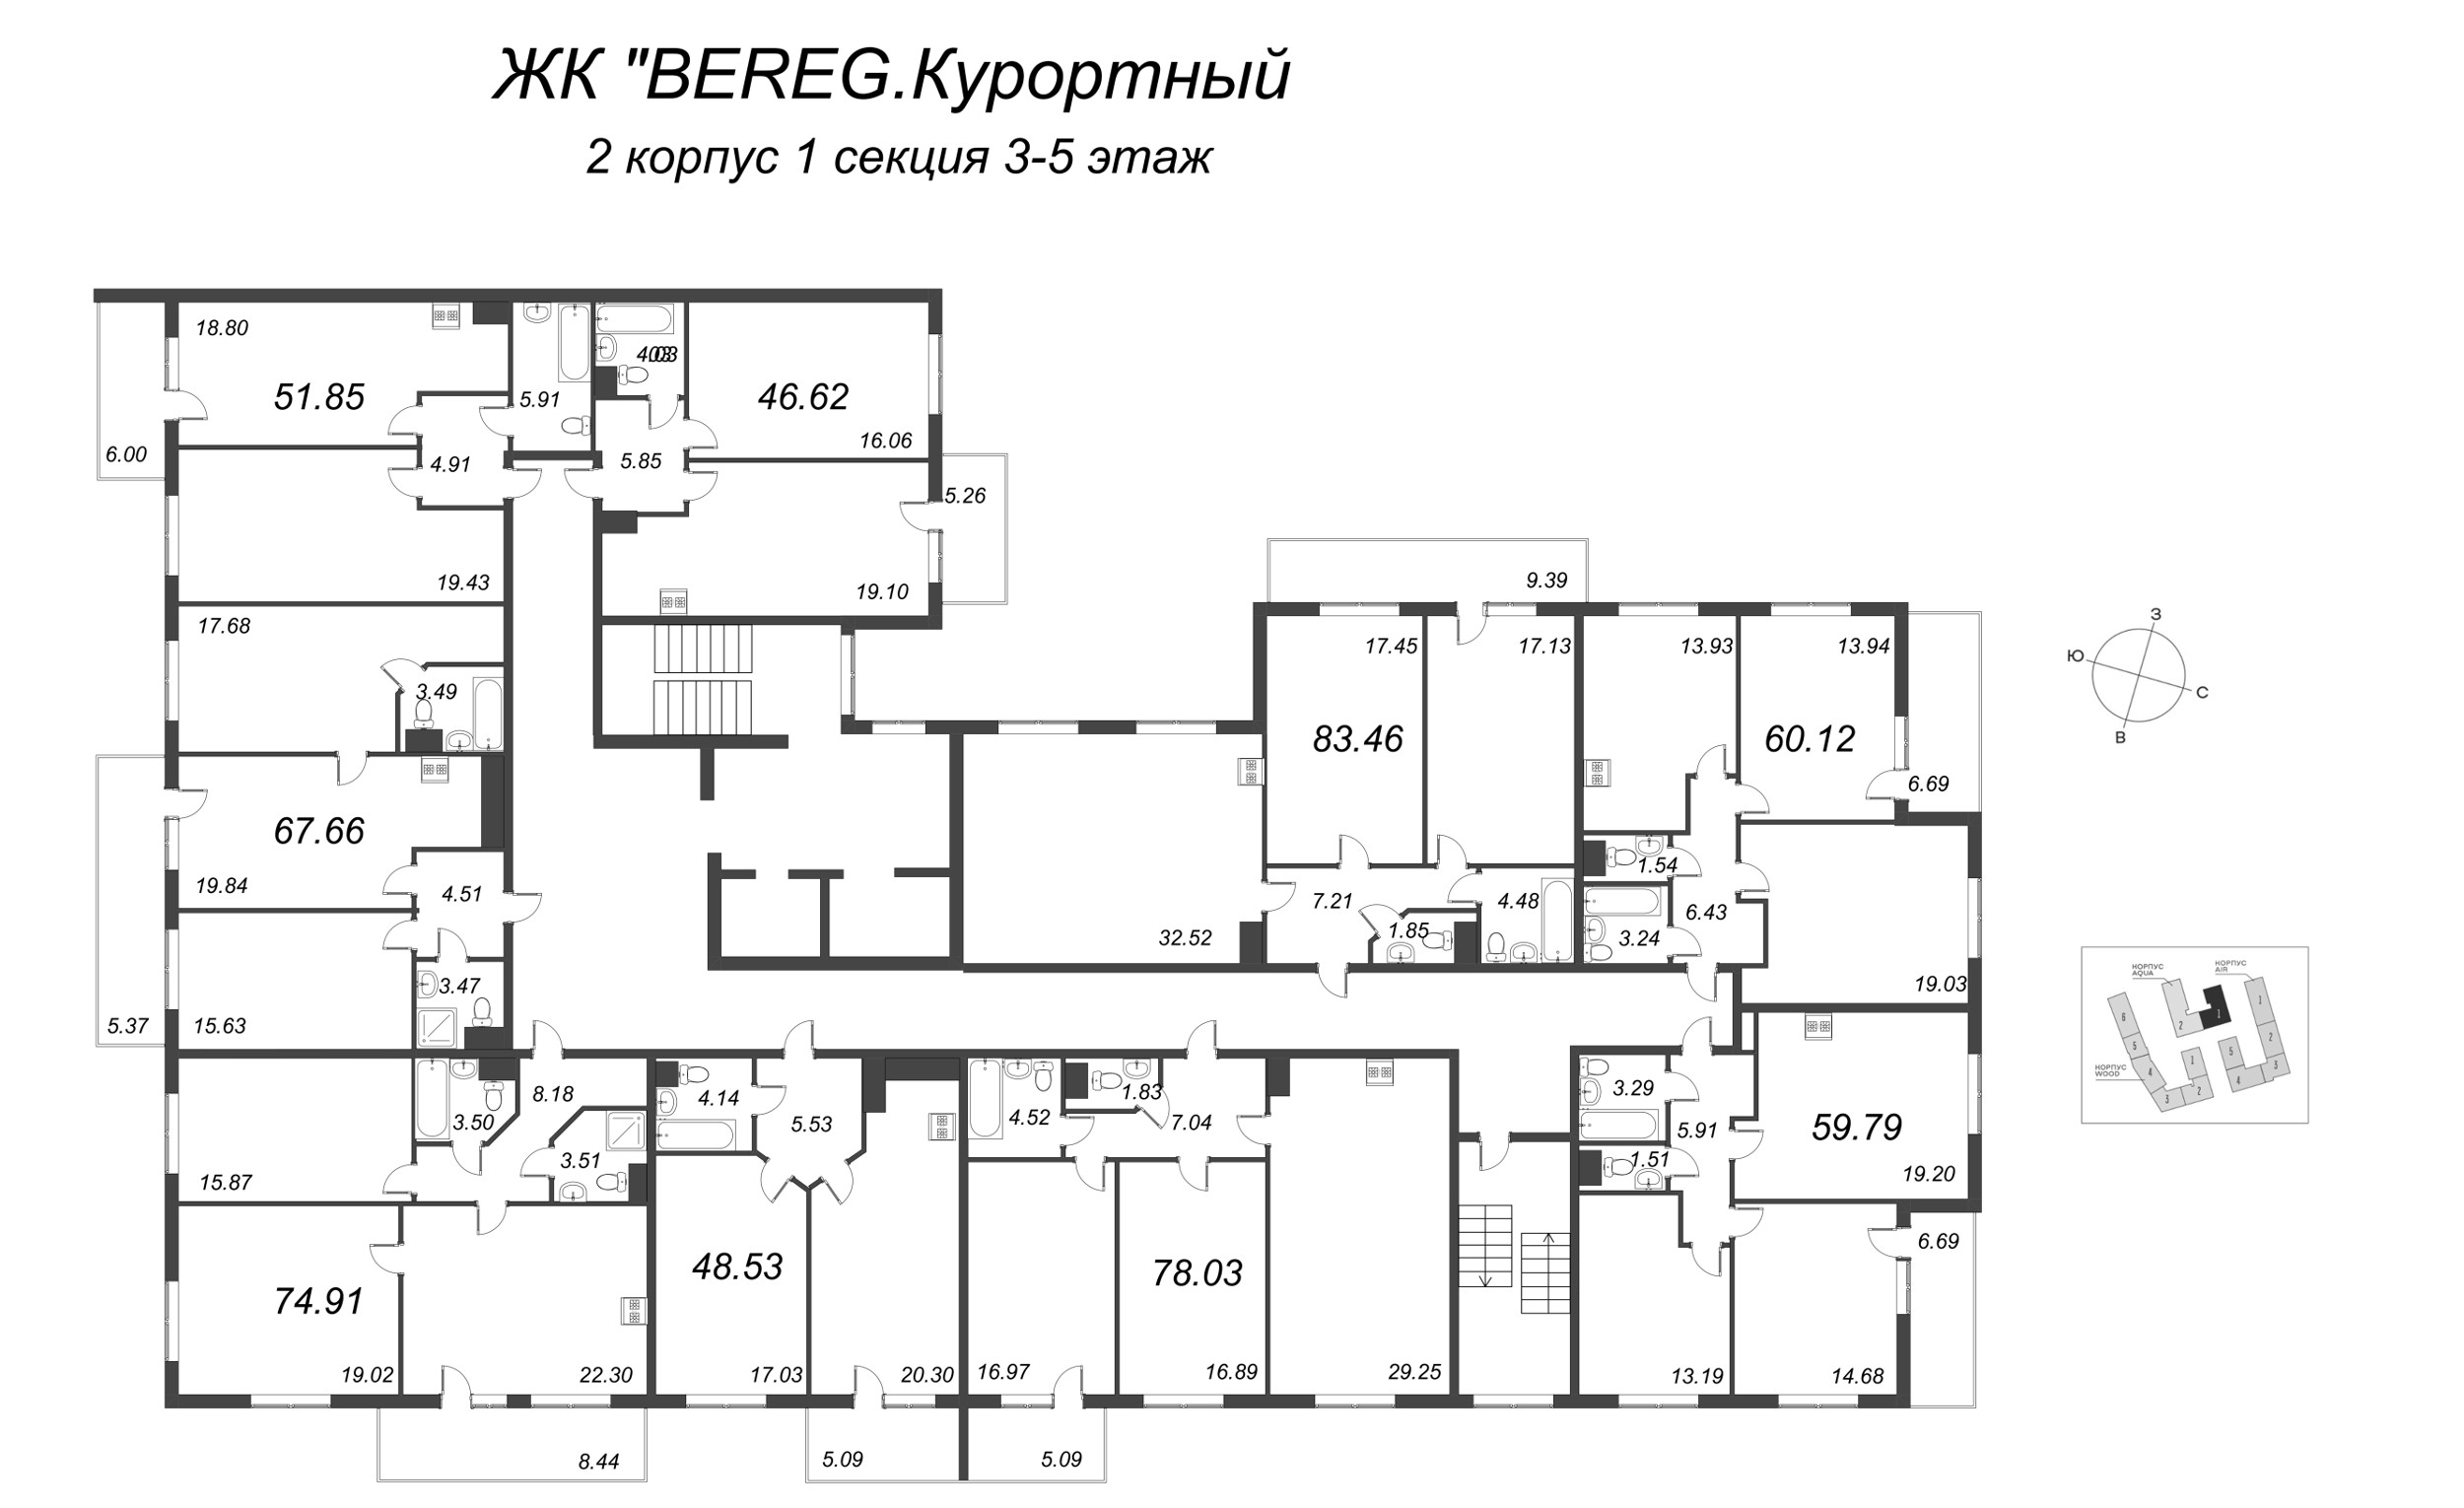 2-комнатная (Евро) квартира, 46.62 м² - планировка этажа